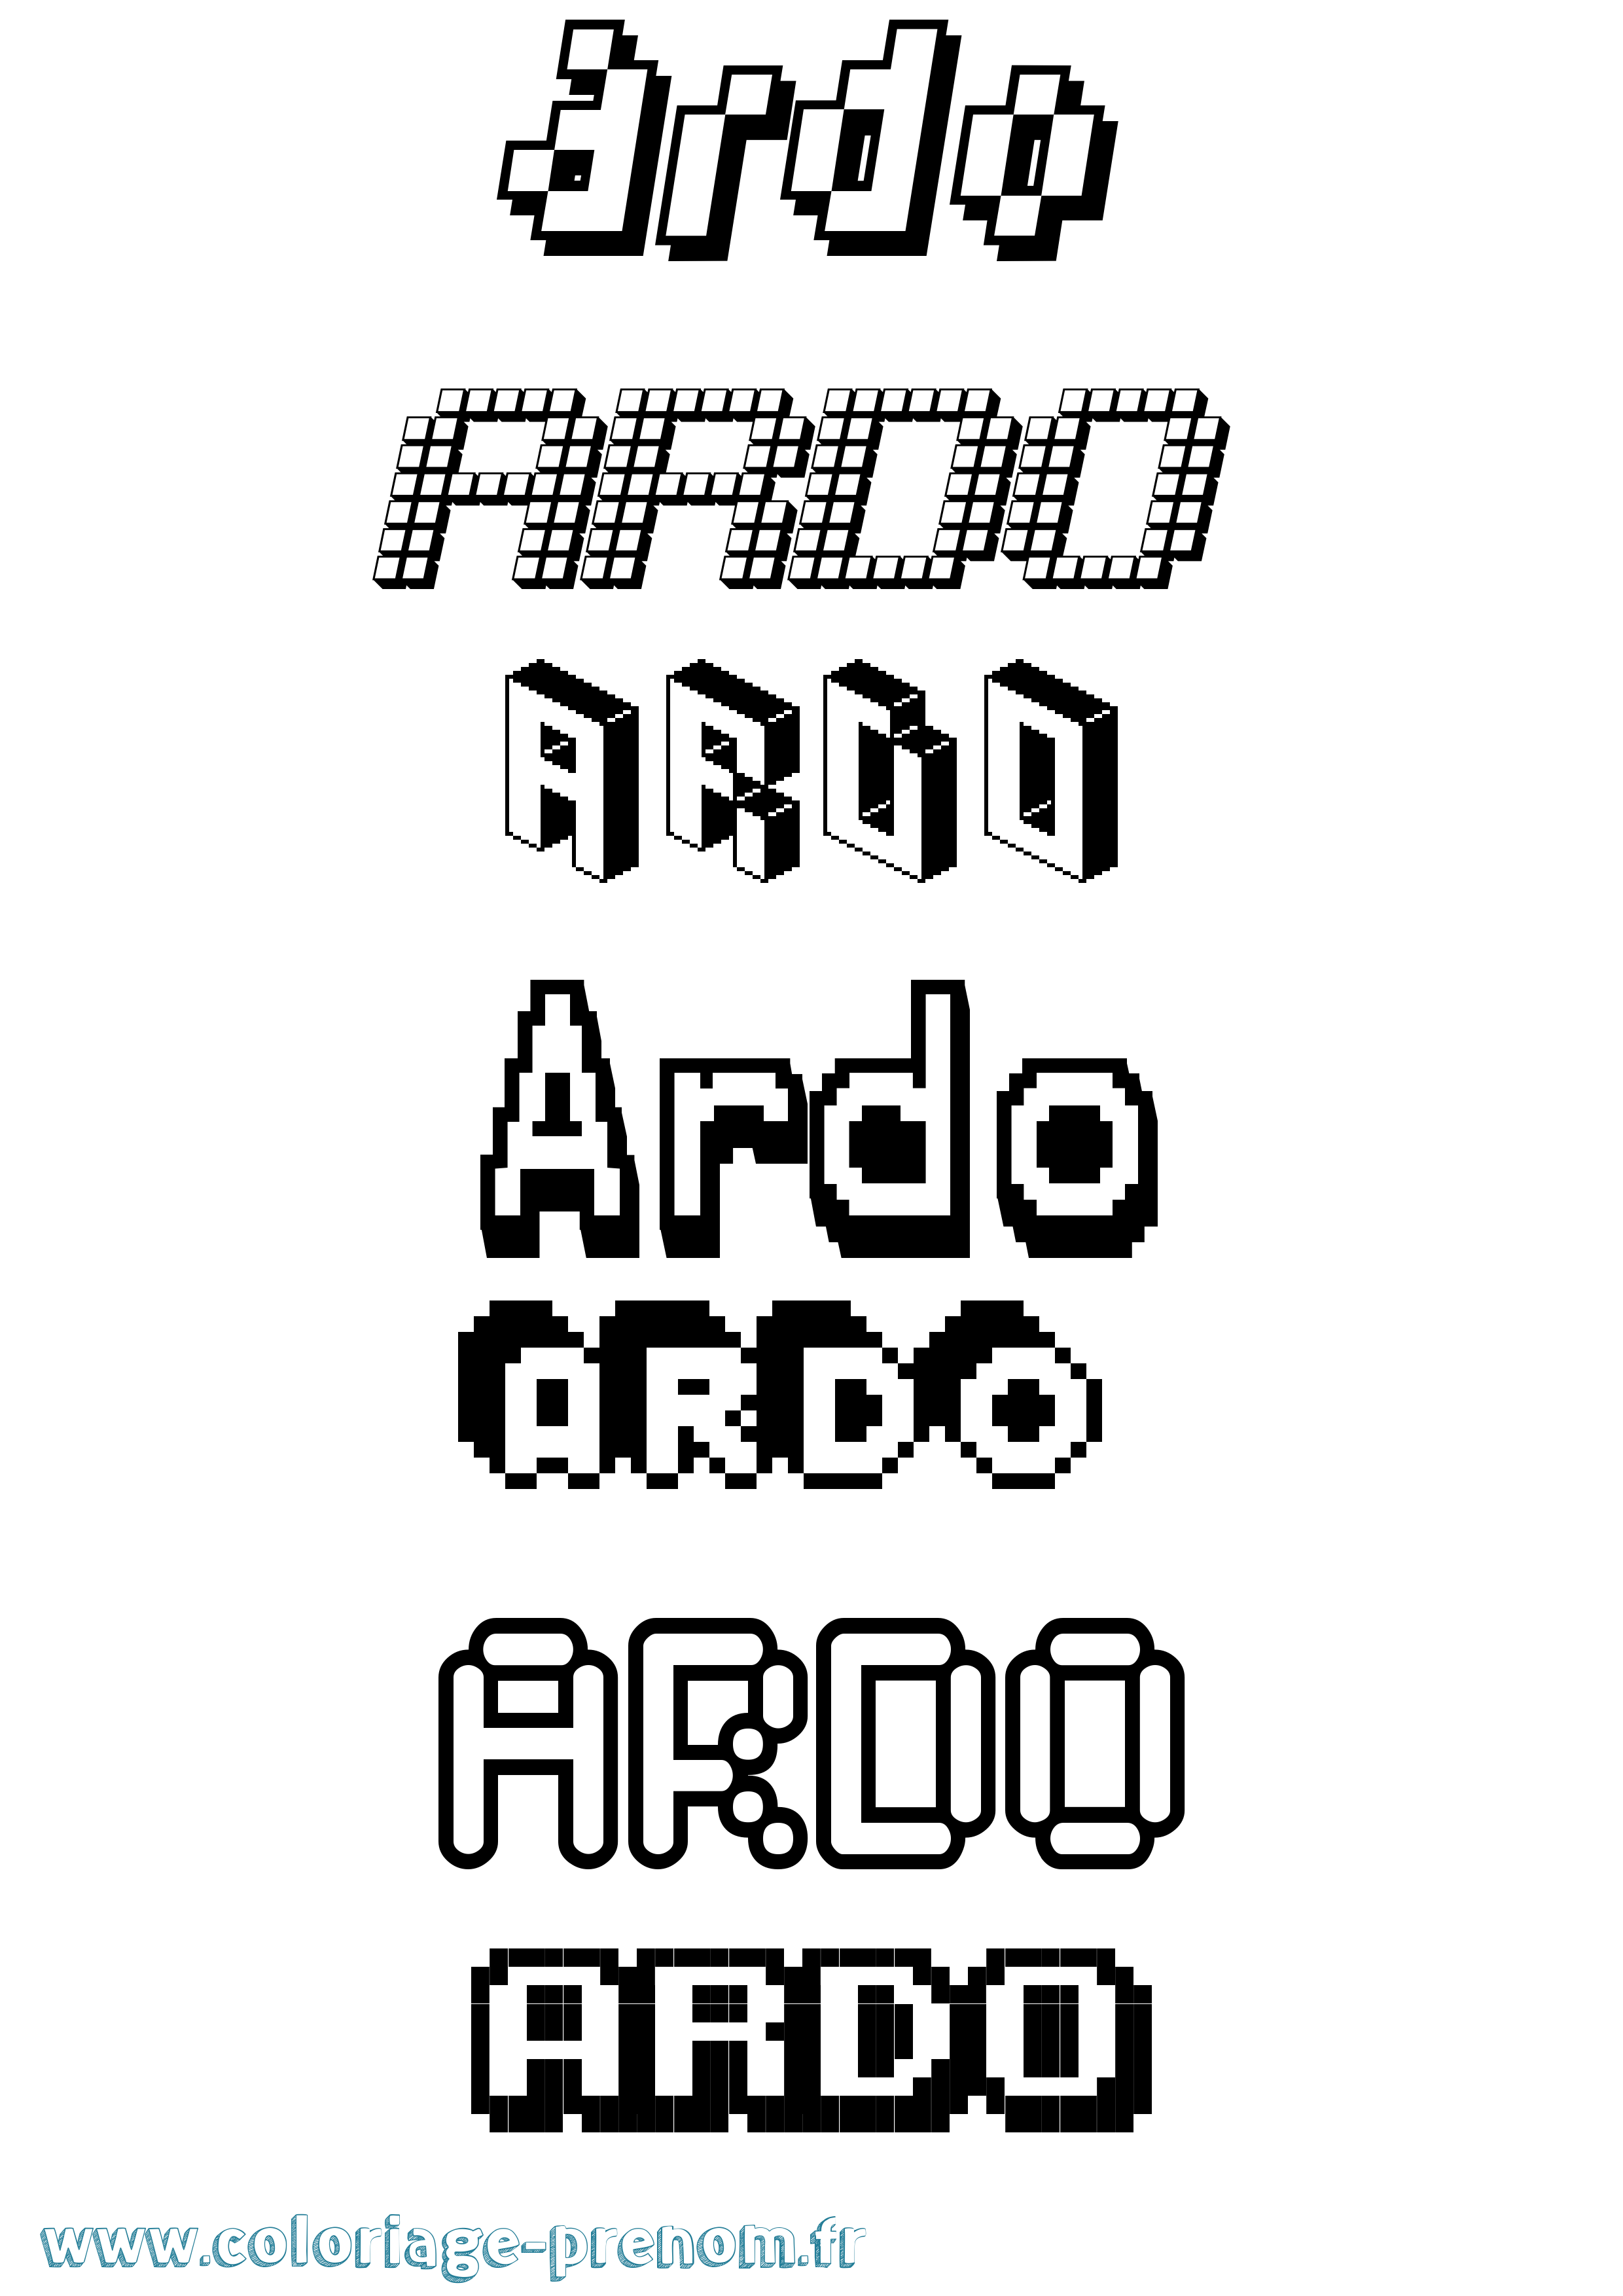 Coloriage prénom Ardo Pixel